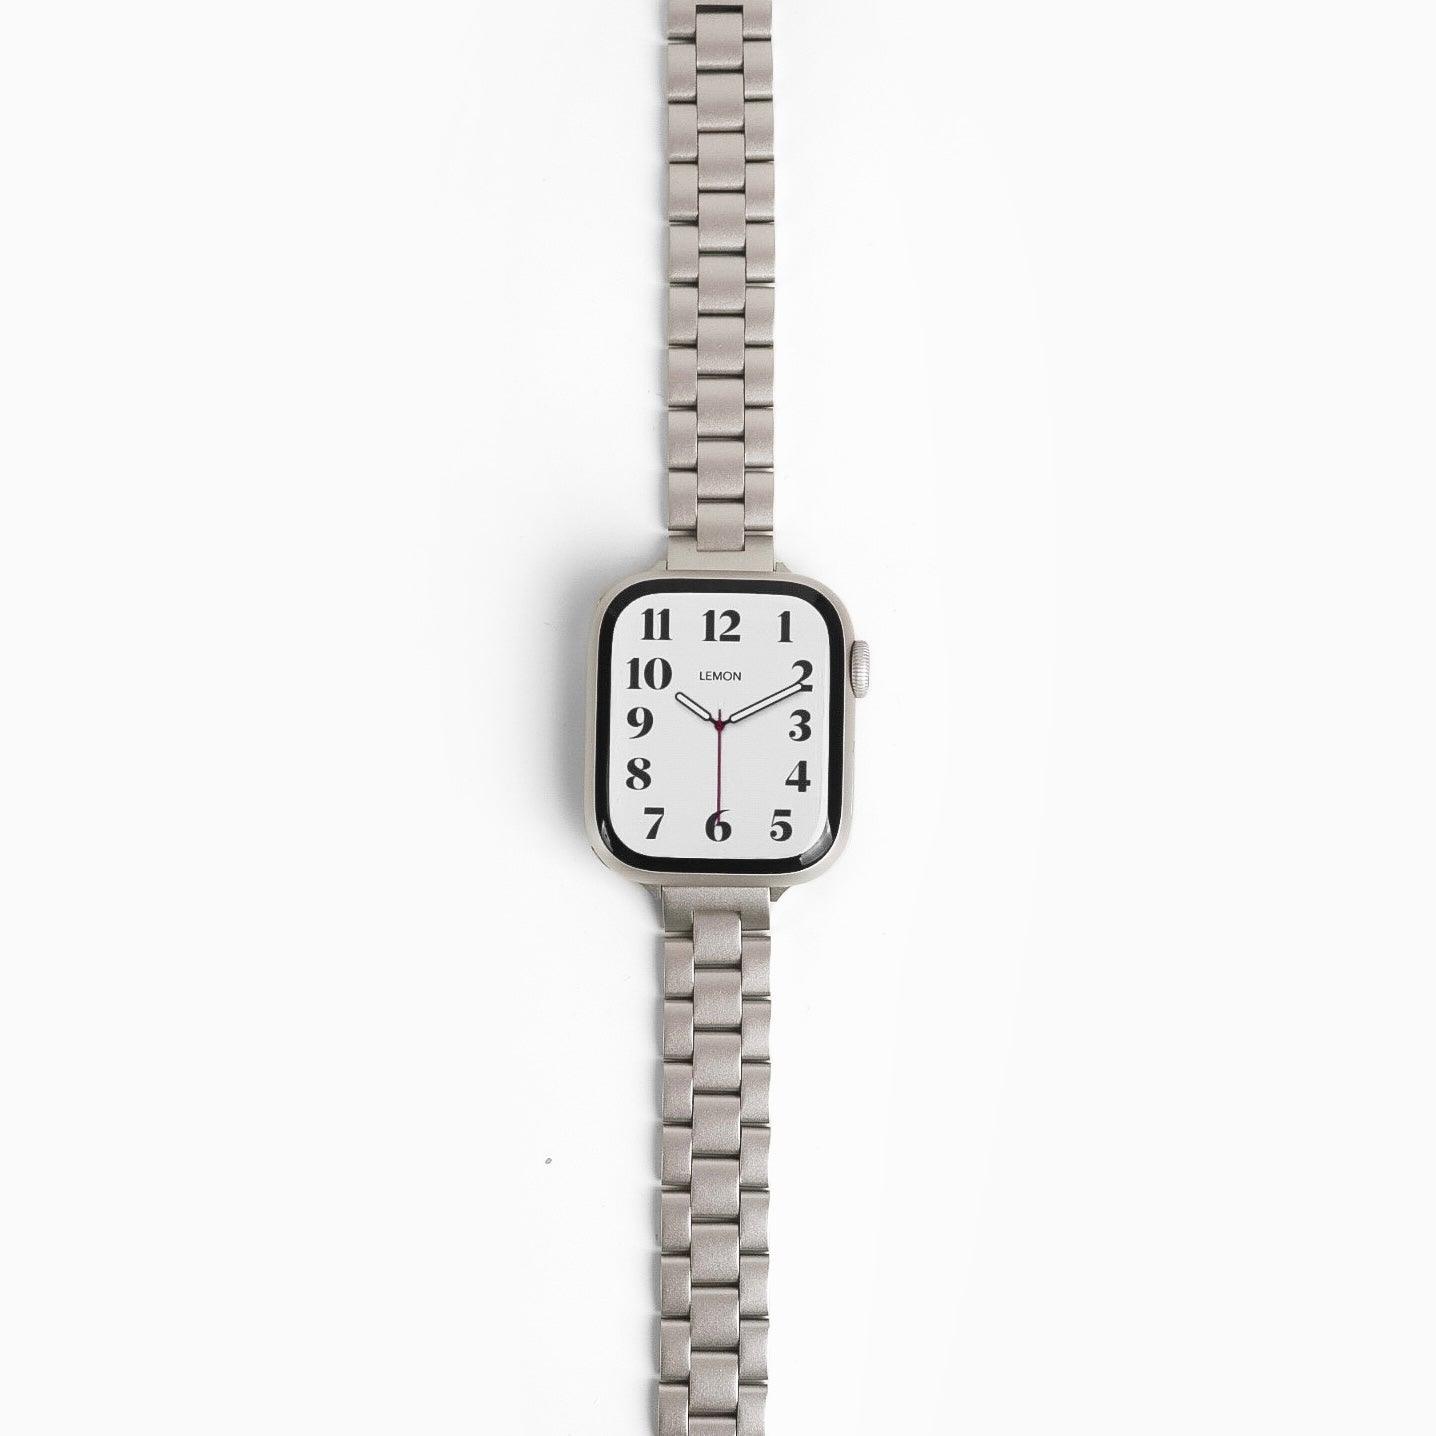 (St-Steel) Slim Oyster Apple Watch Band - Starlight